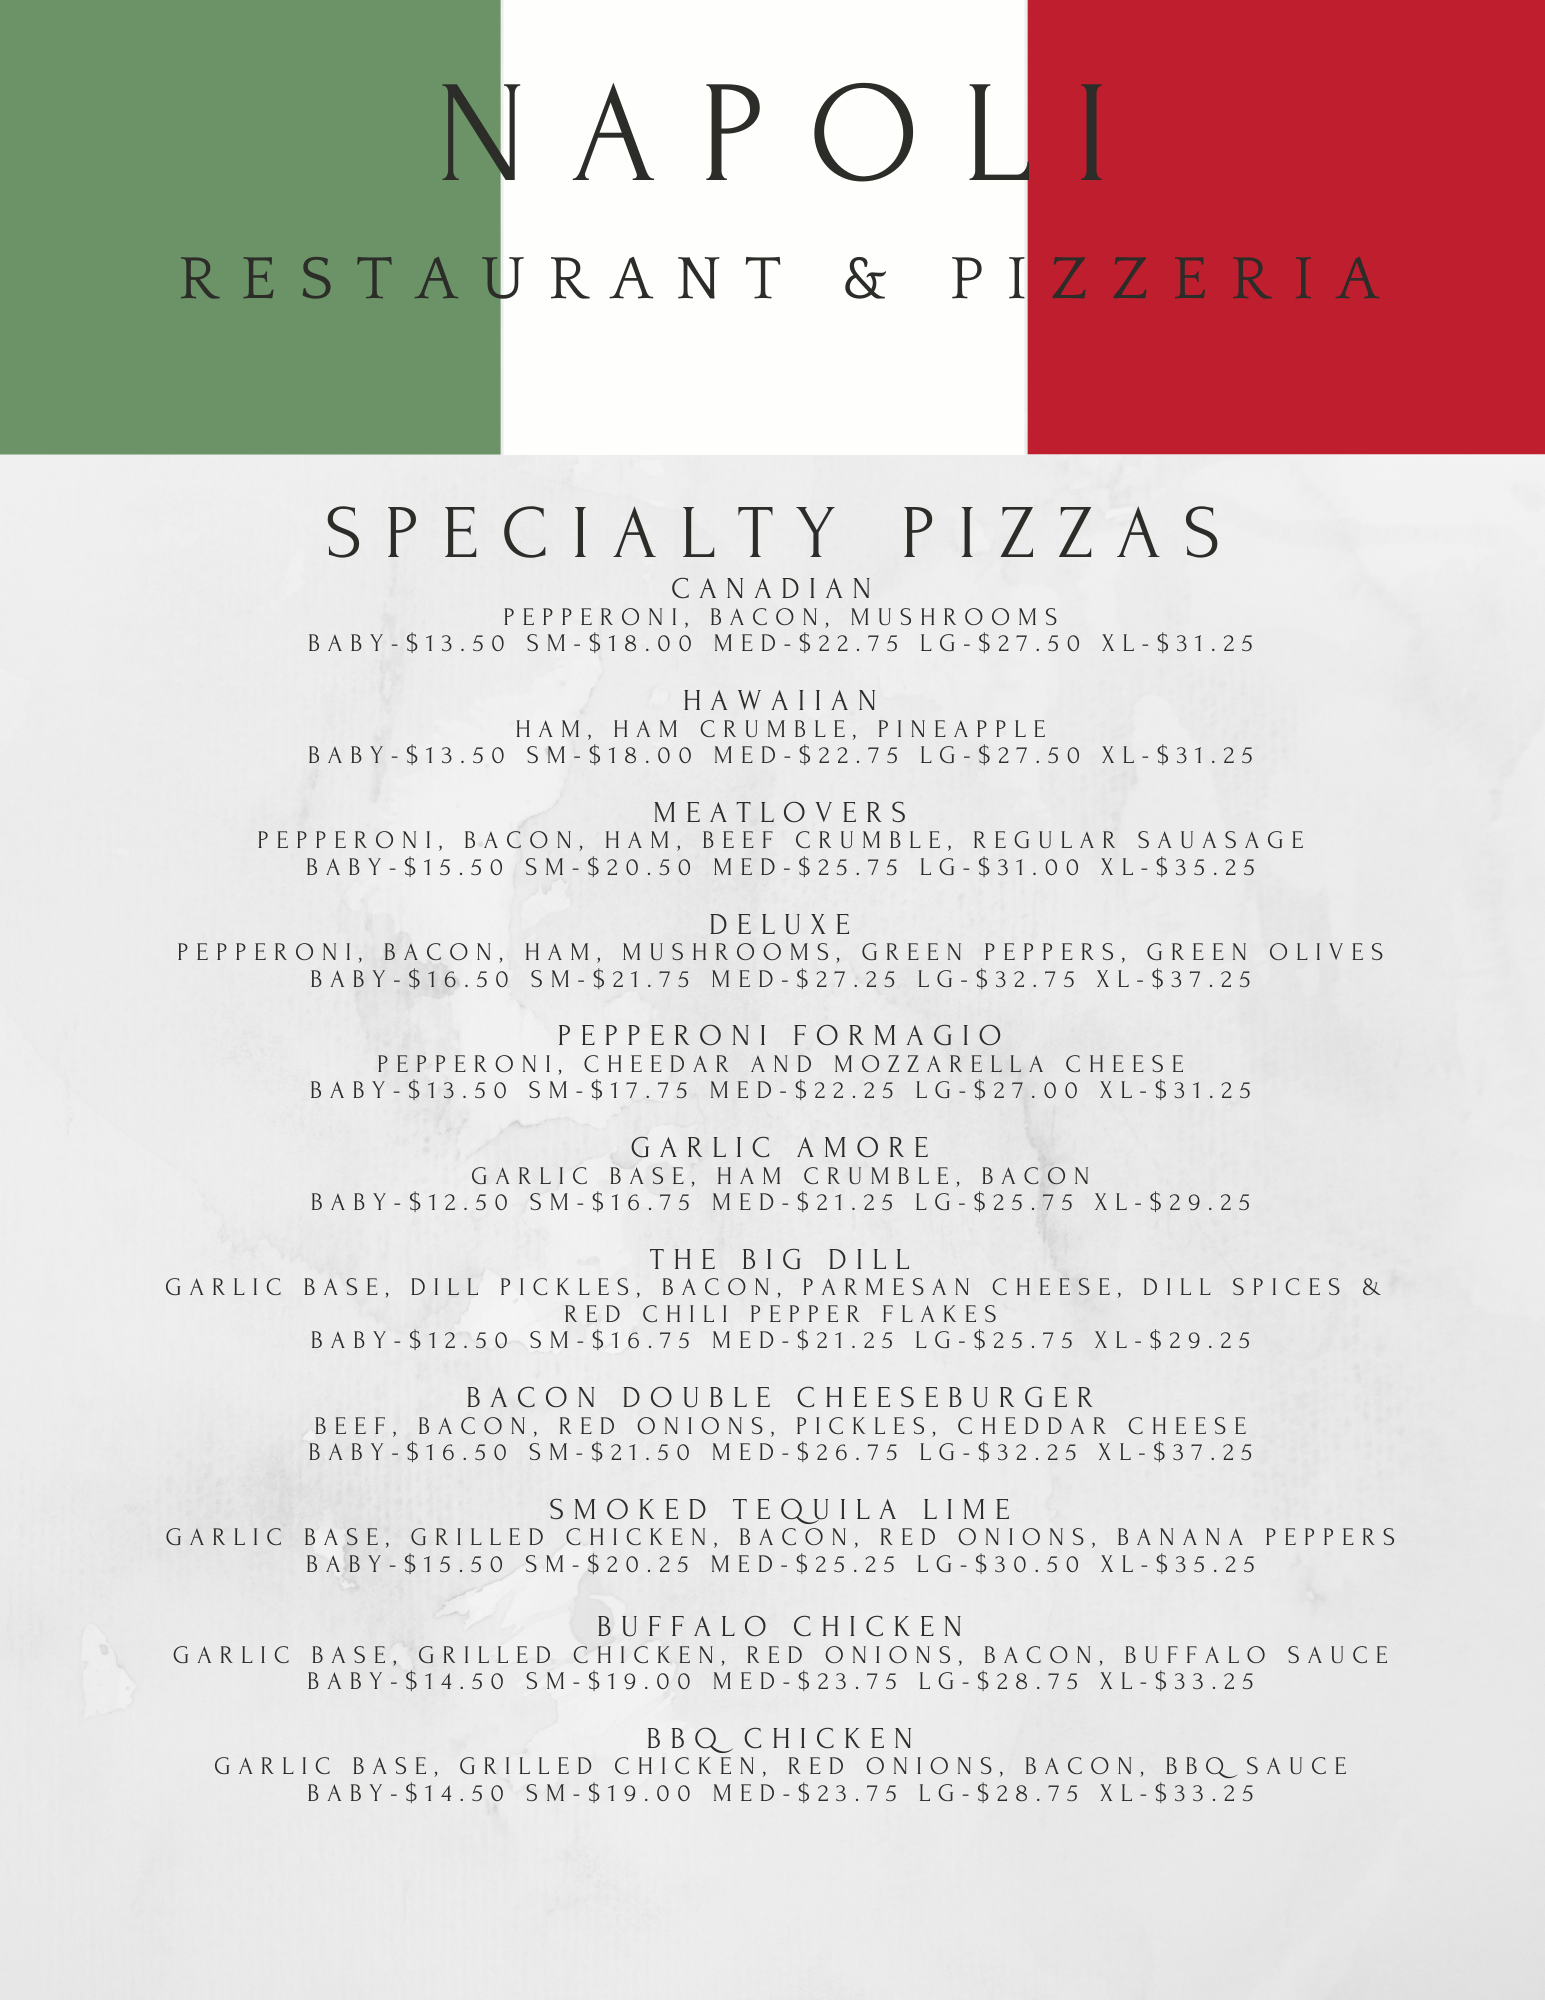 Napoli Pizza 940 Murphy Rd, Sarnia, ON N7S 5C4